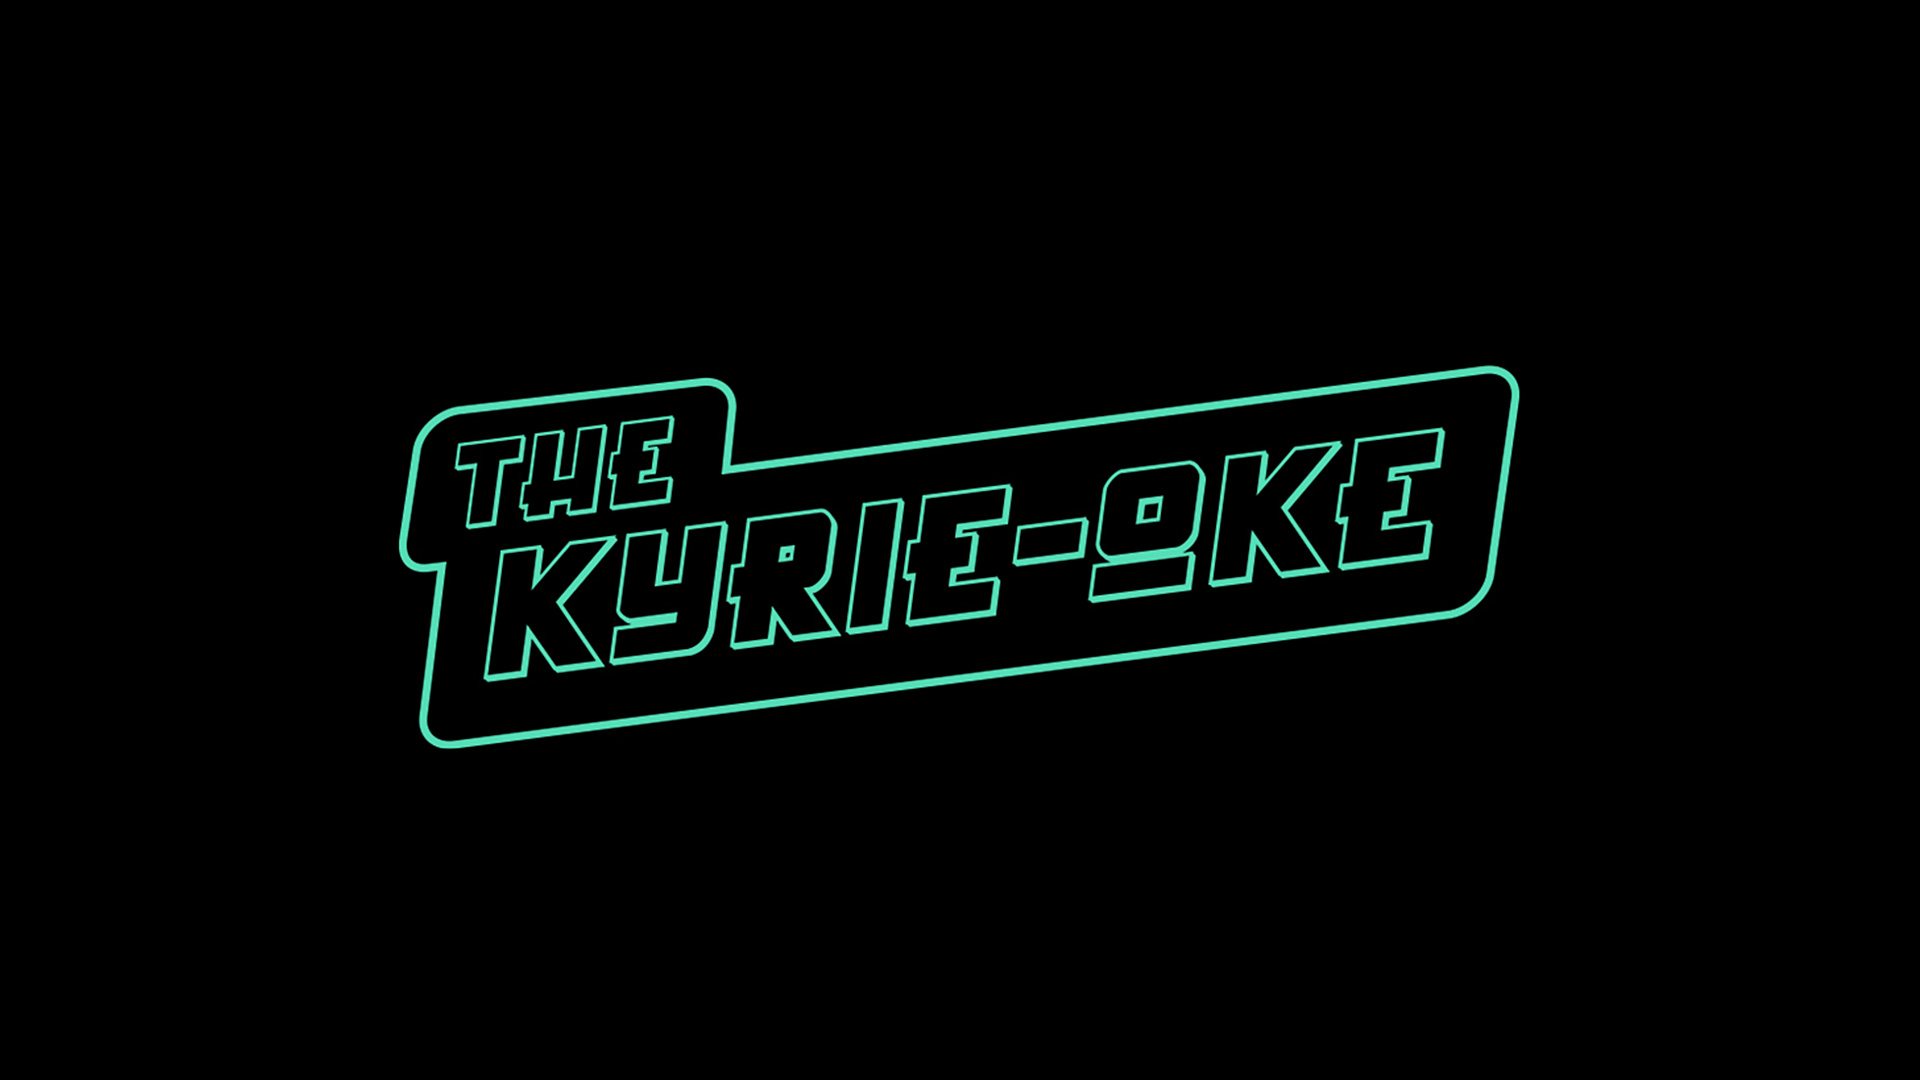 Nike – Kyrie-oke